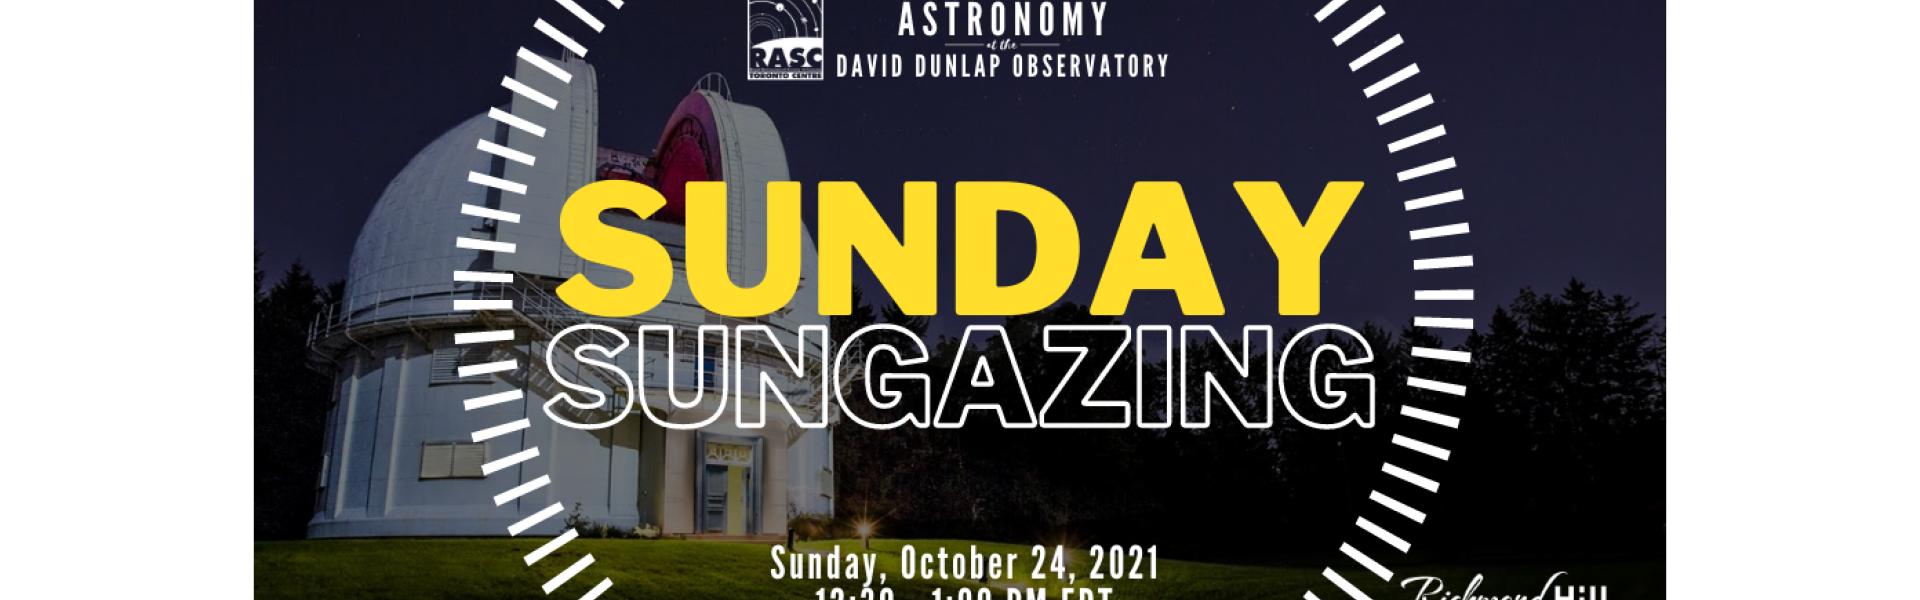 DDO: Sunday Sungazing